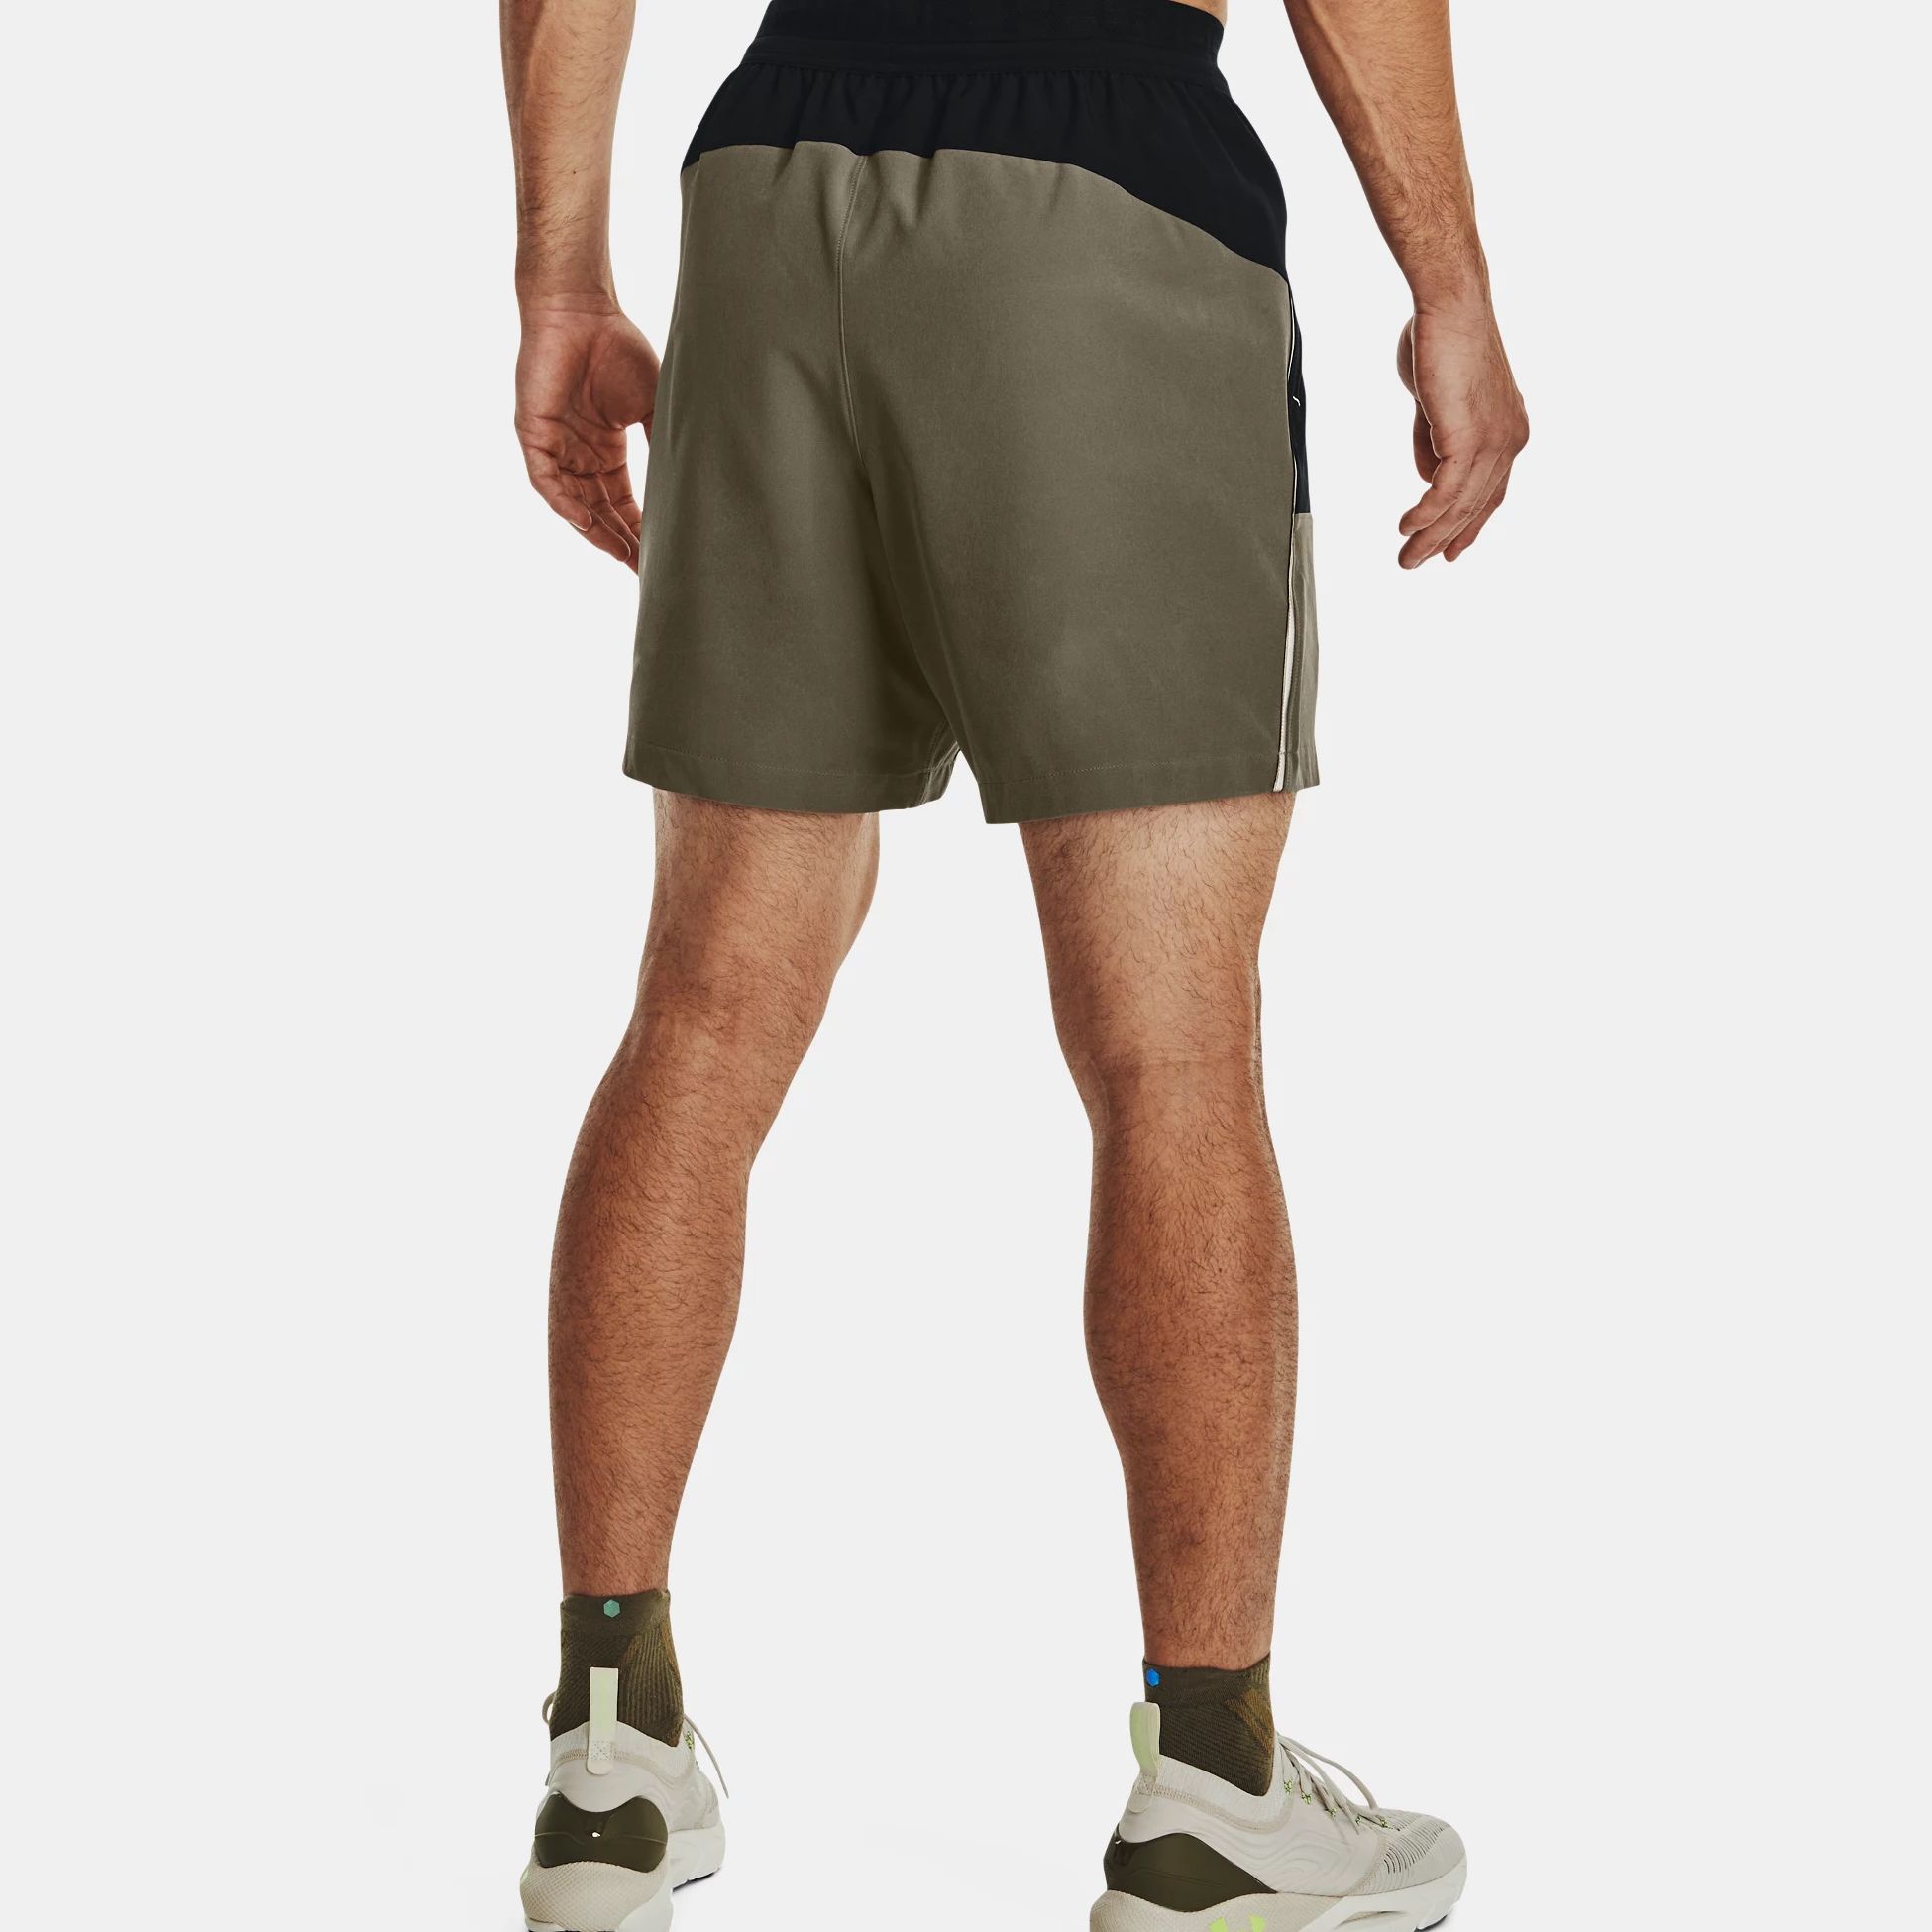 Shorts -  under armour UA Terrain Woven Shorts